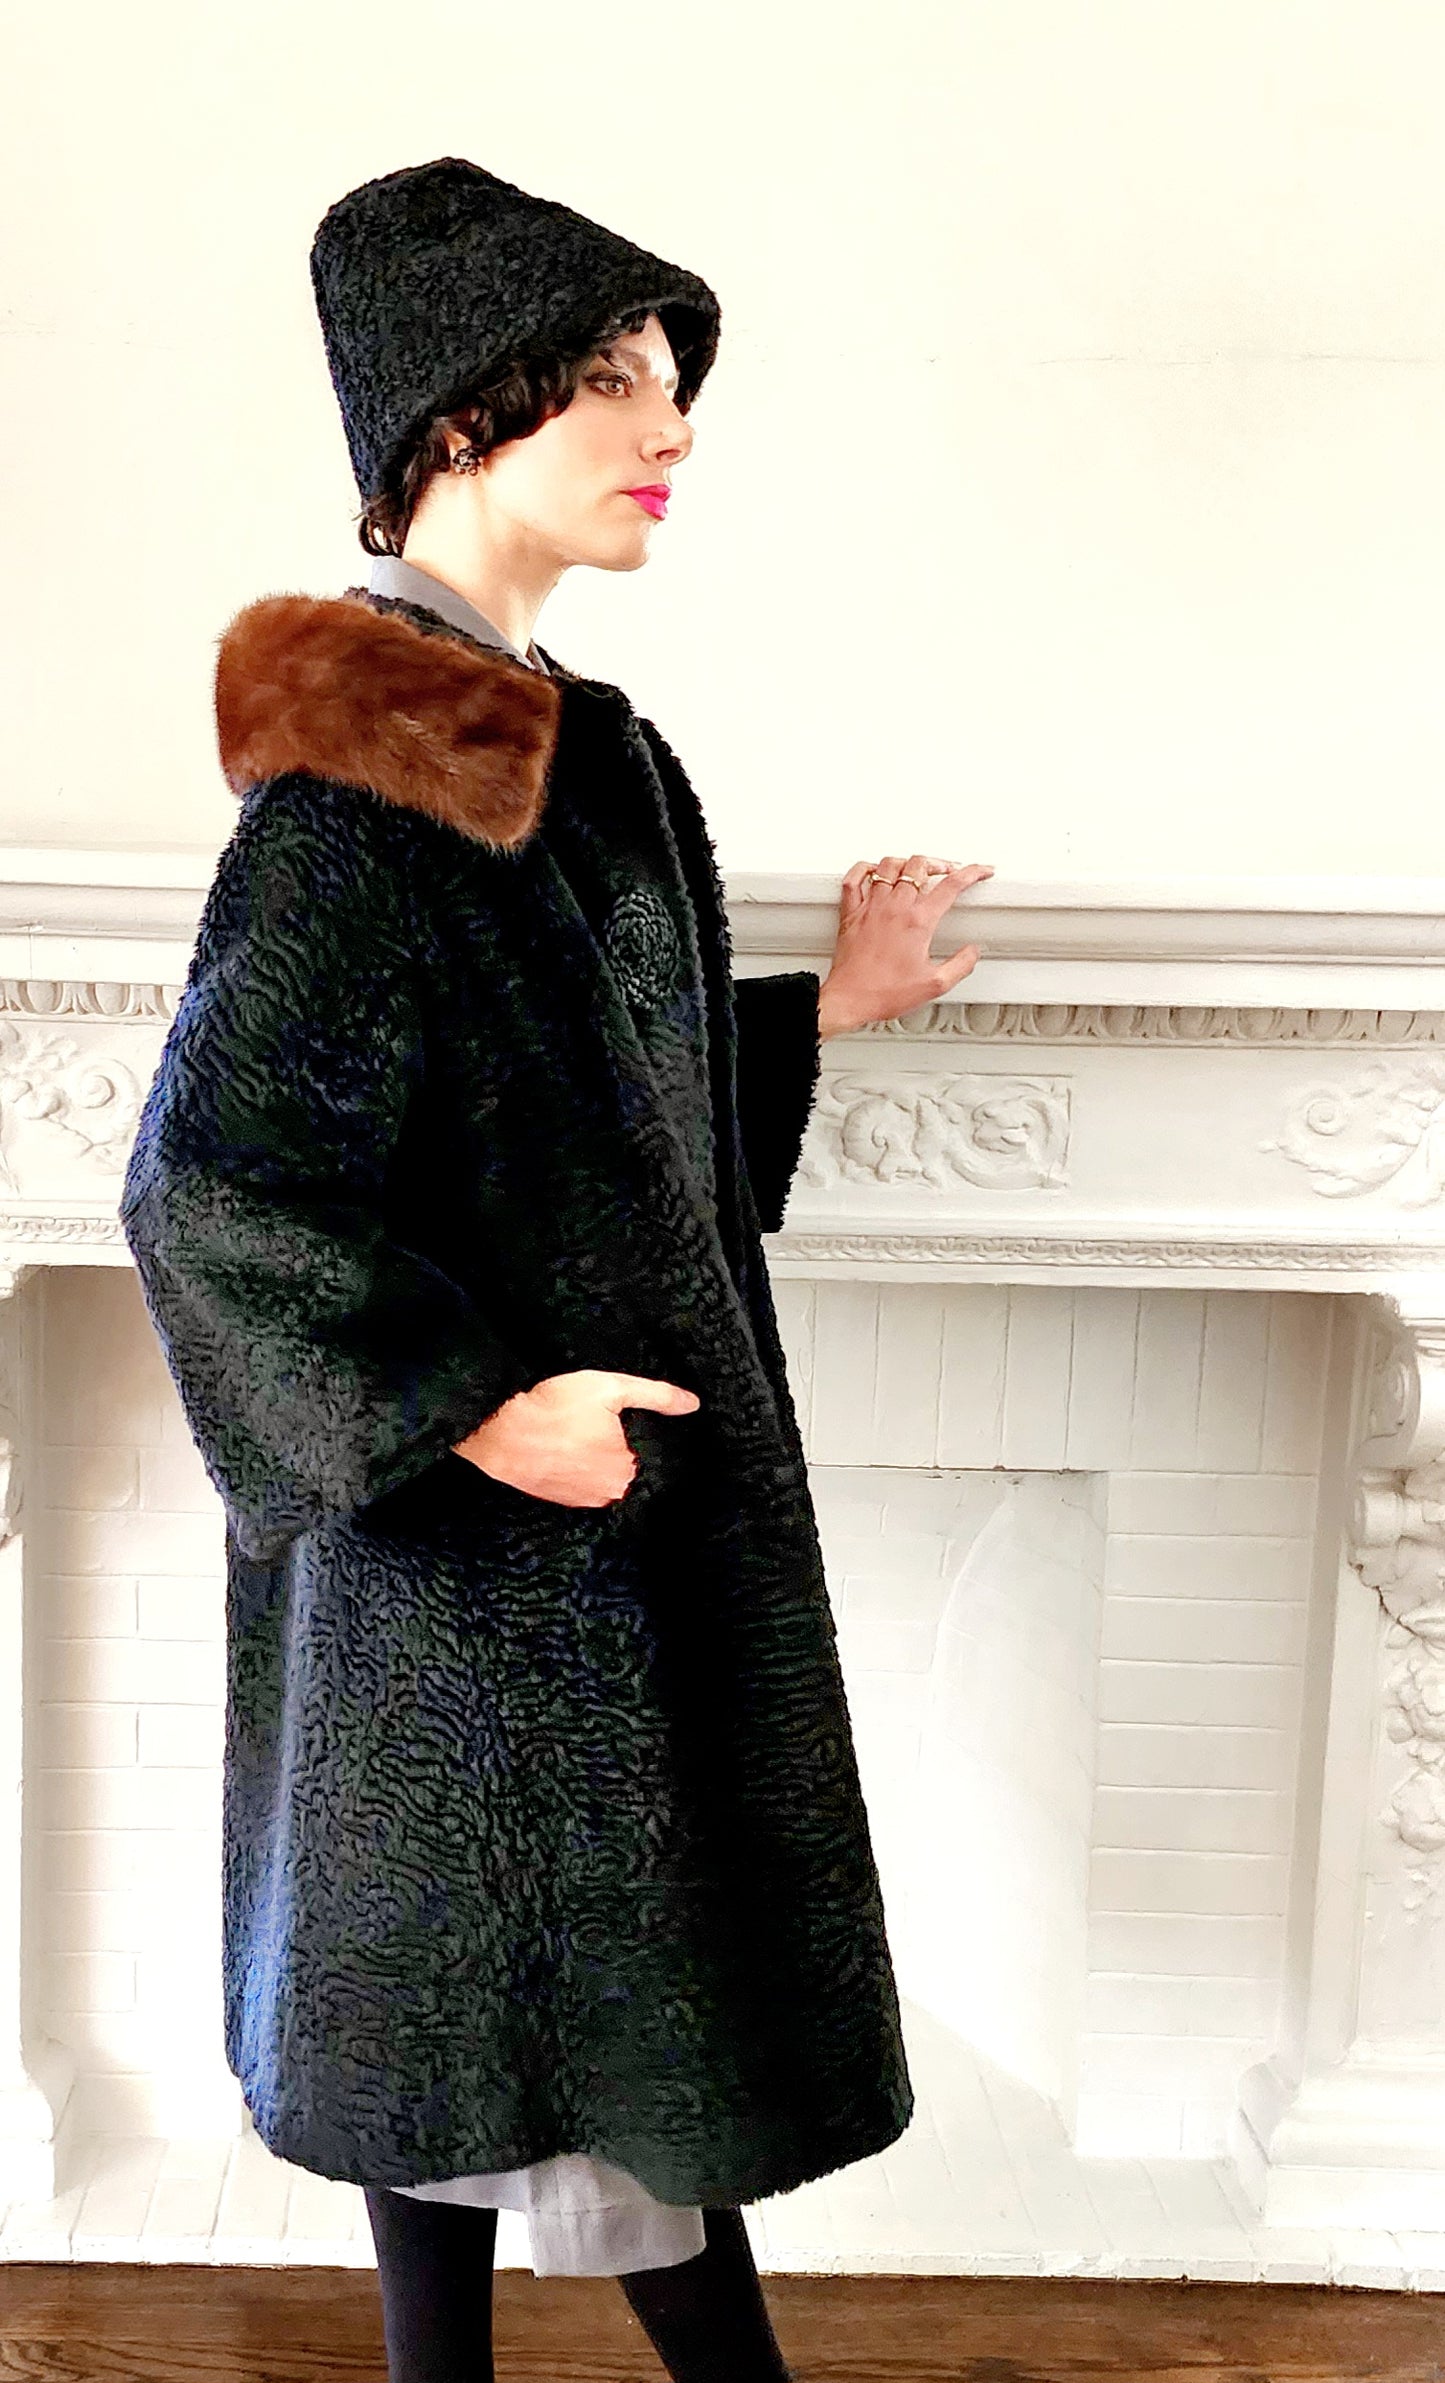 60s Black Coat in Faux Persian Curly Wool by Sai Shai & Brown Mink Collar Howard Lyon Inc